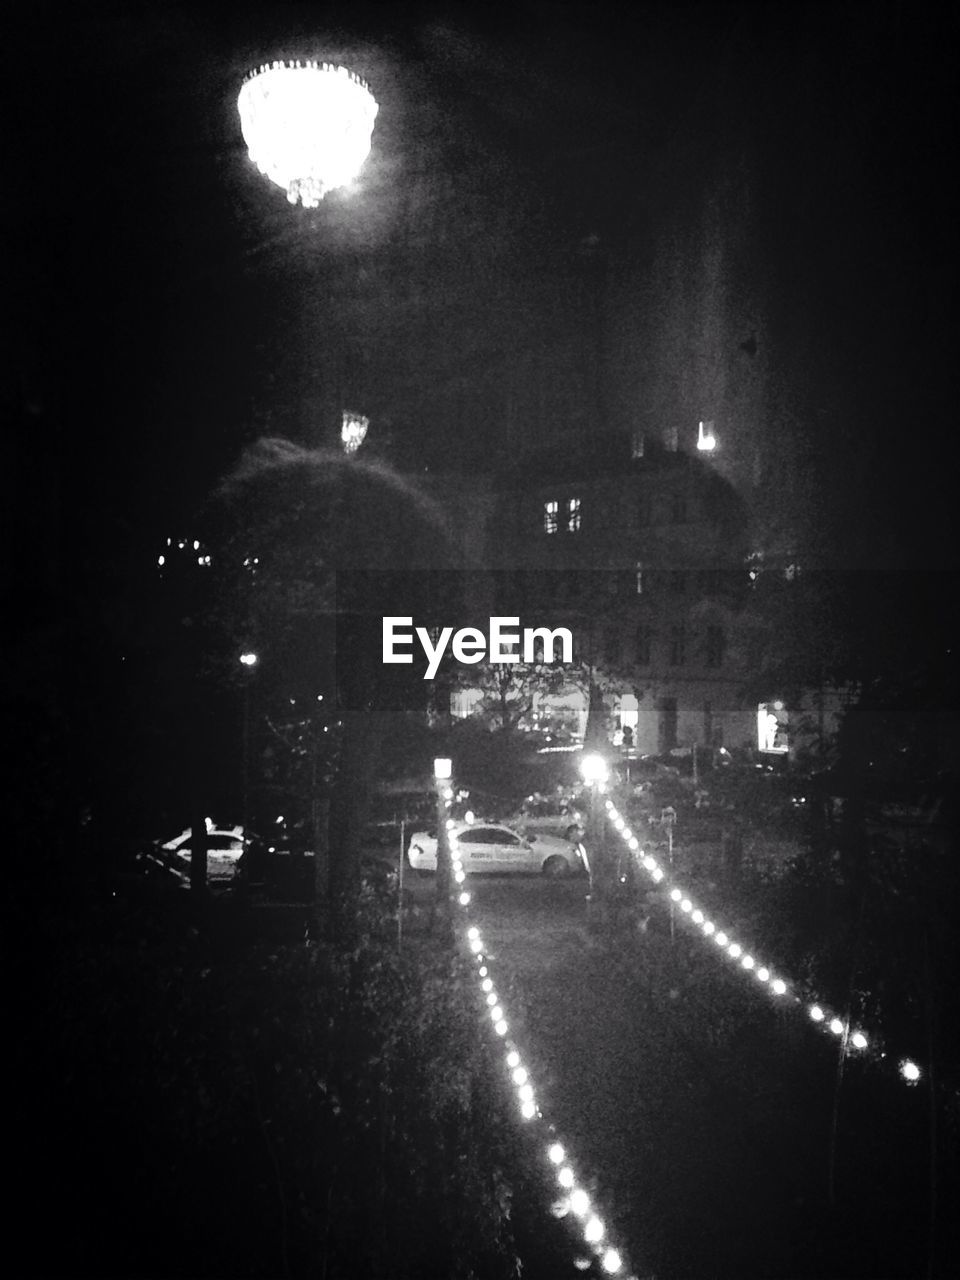 VIEW OF ILLUMINATED STREET LIGHTS IN NIGHT